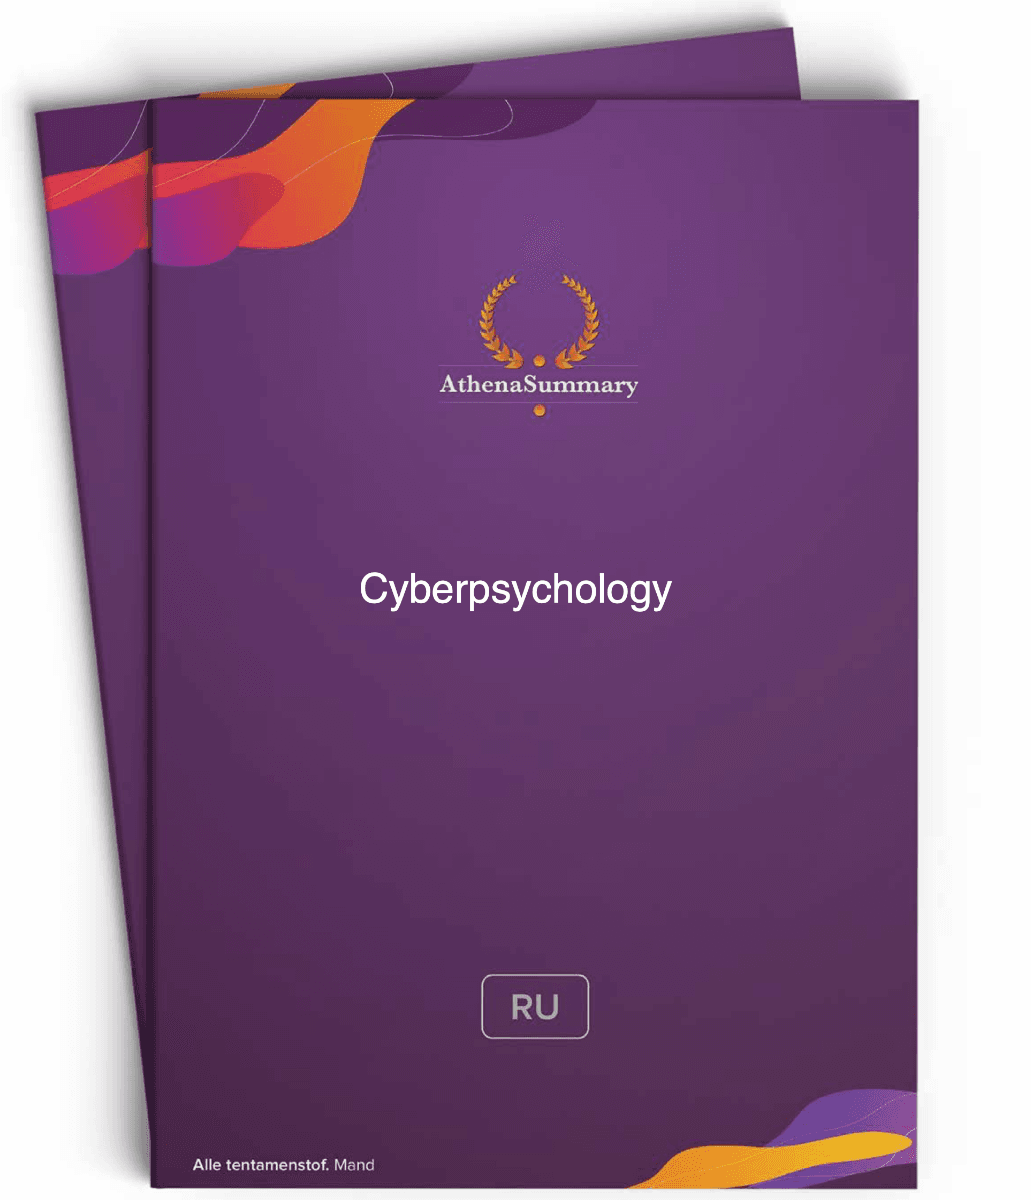 Literature Summary - Cyberpsychology